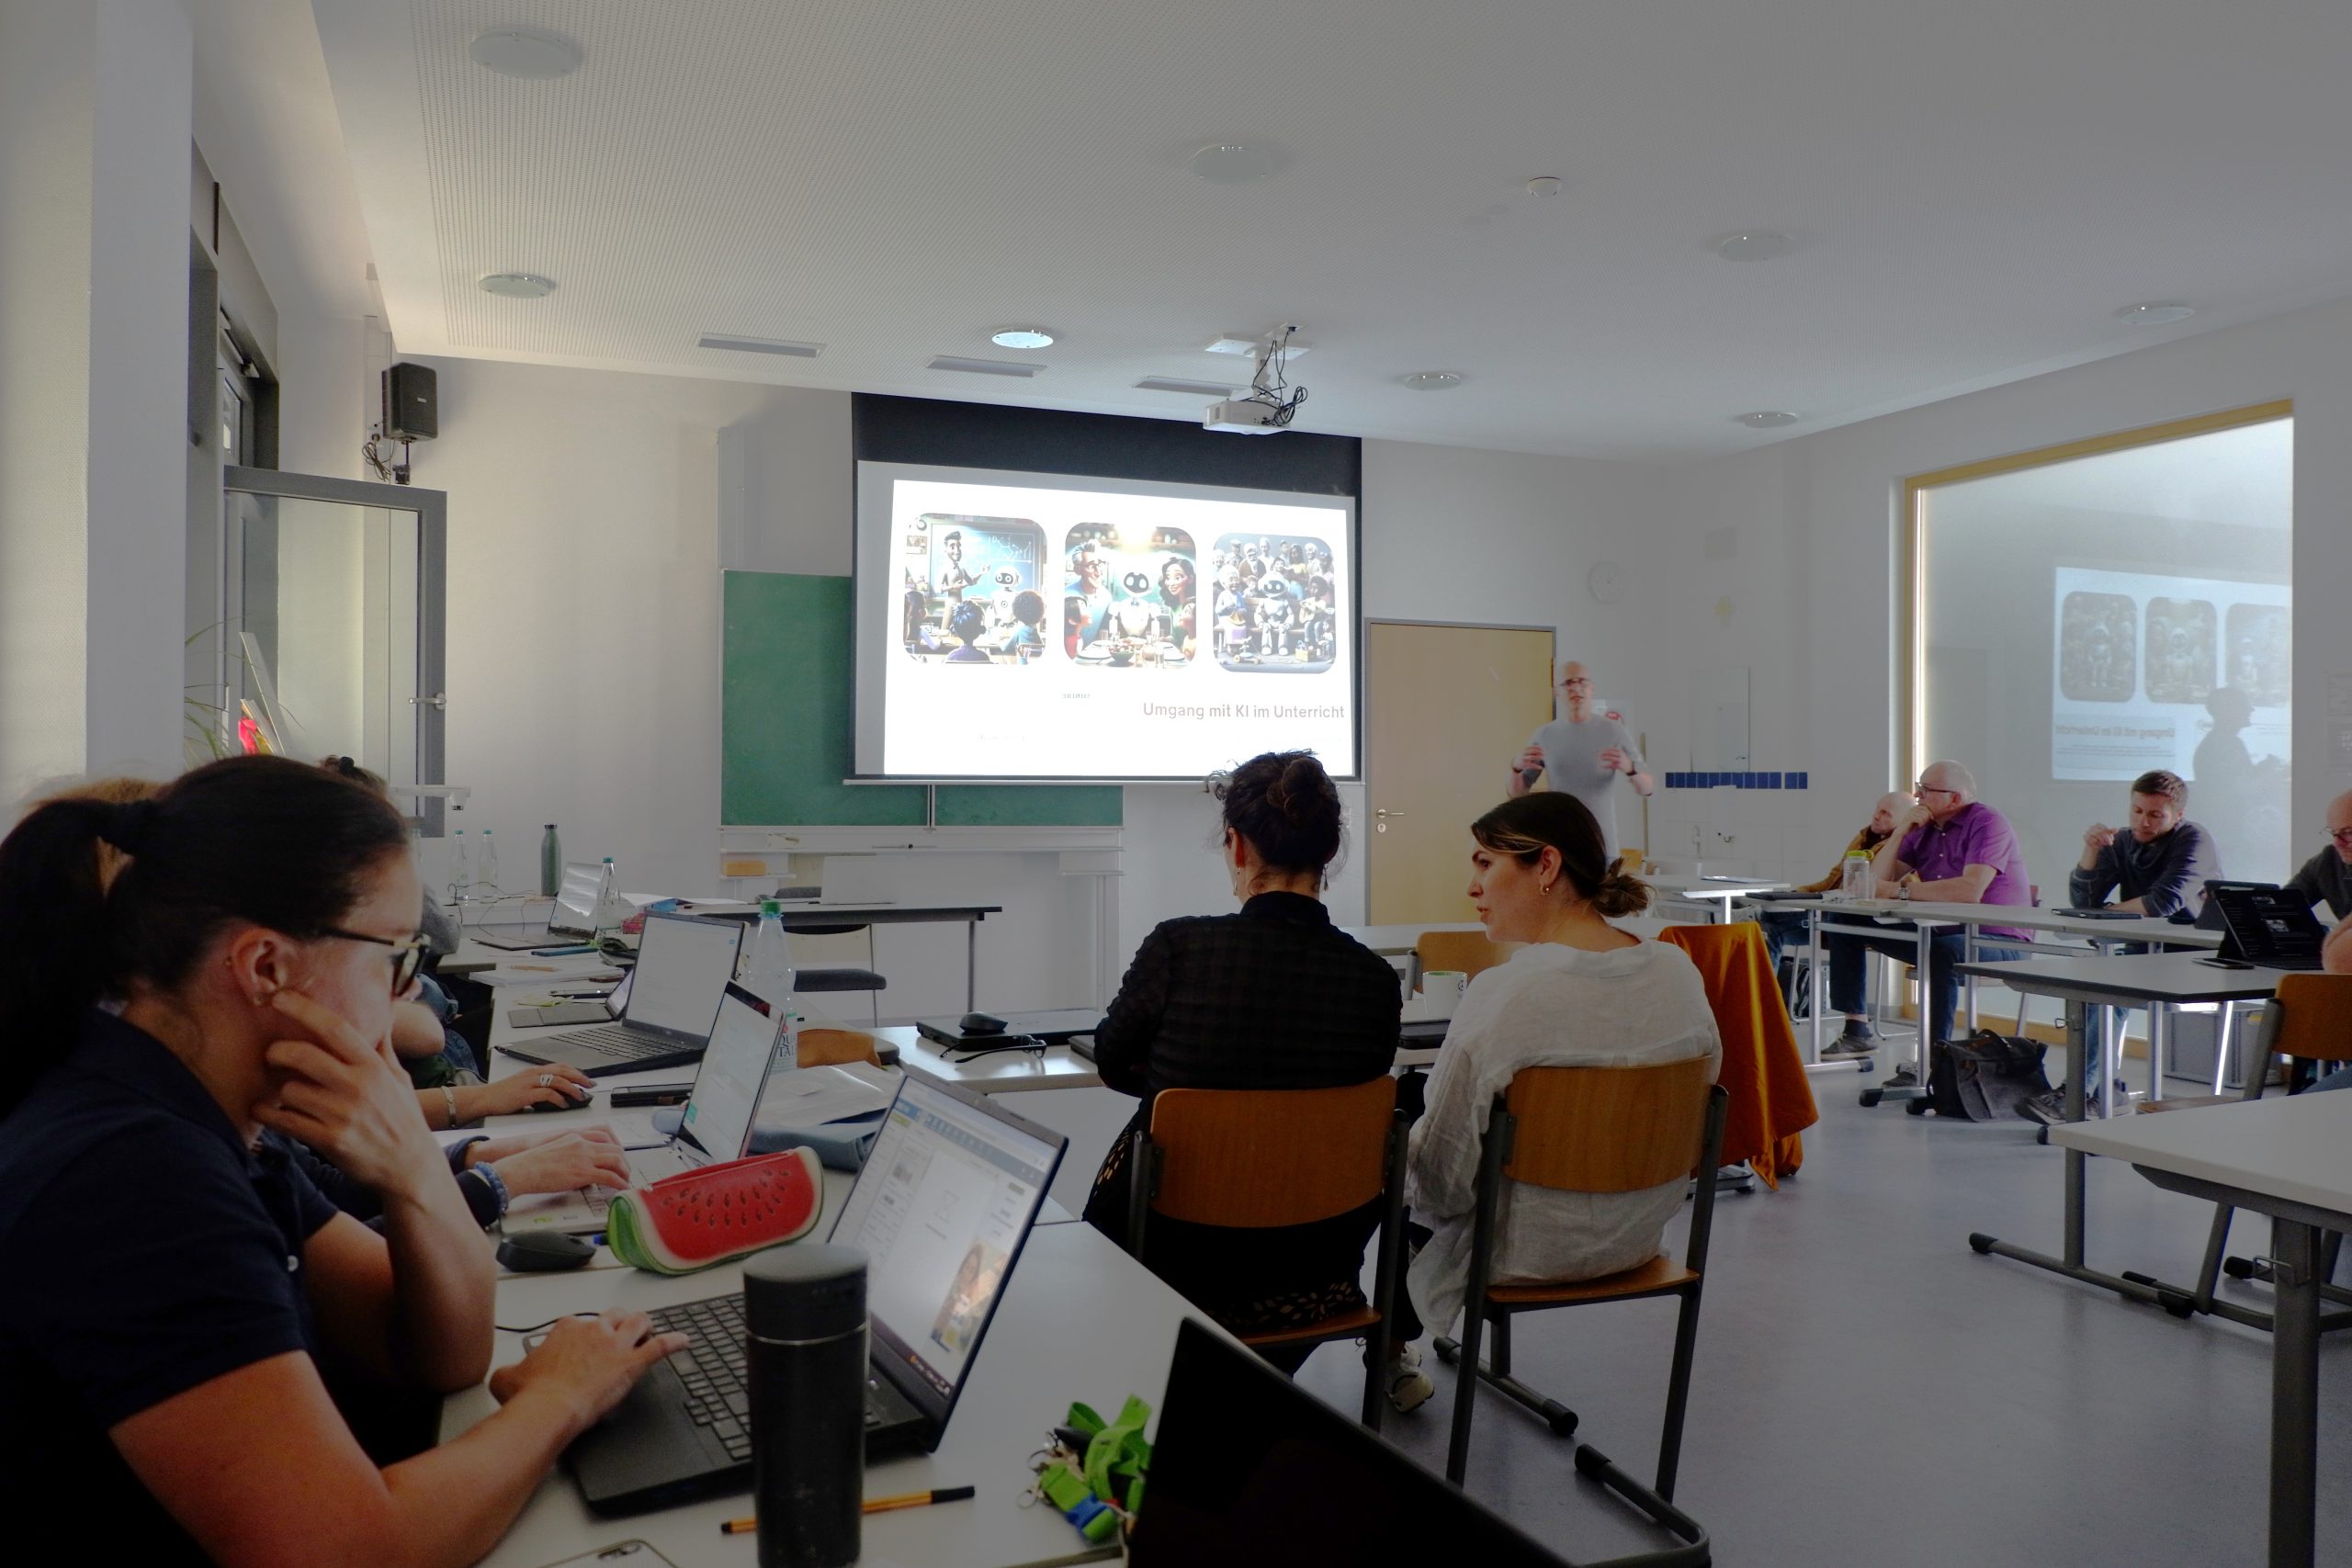 Medienpädagogischer Tag an der Jakob-Emele-Realschule: Digitale Kompetenz im Fokus